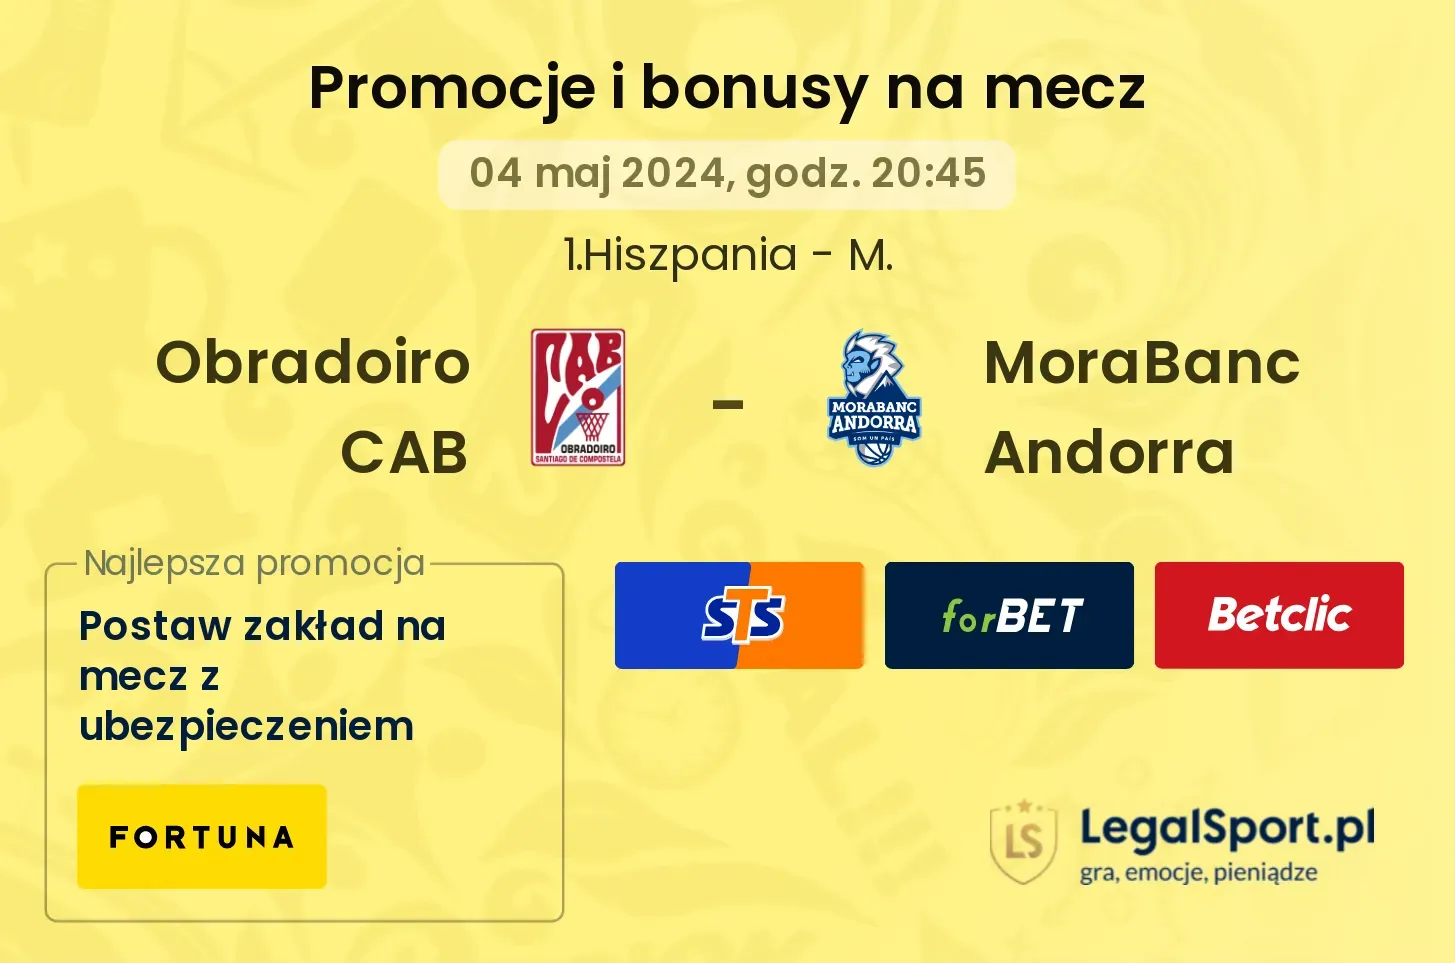 Obradoiro CAB - MoraBanc Andorra promocje bonusy na mecz